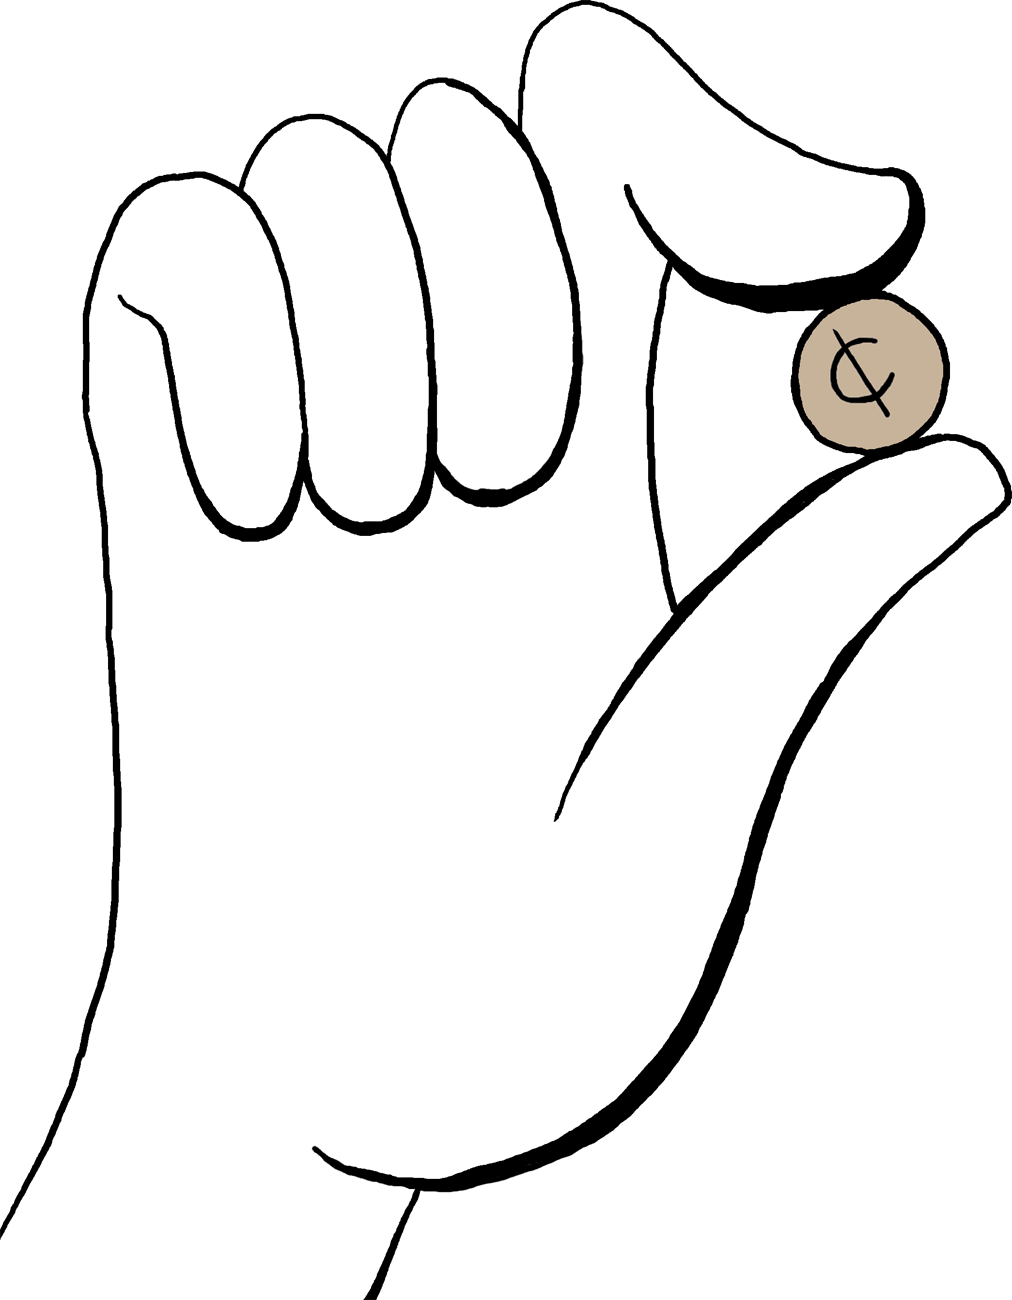 A - Cartoon Hand Holding Something (1012x1300)